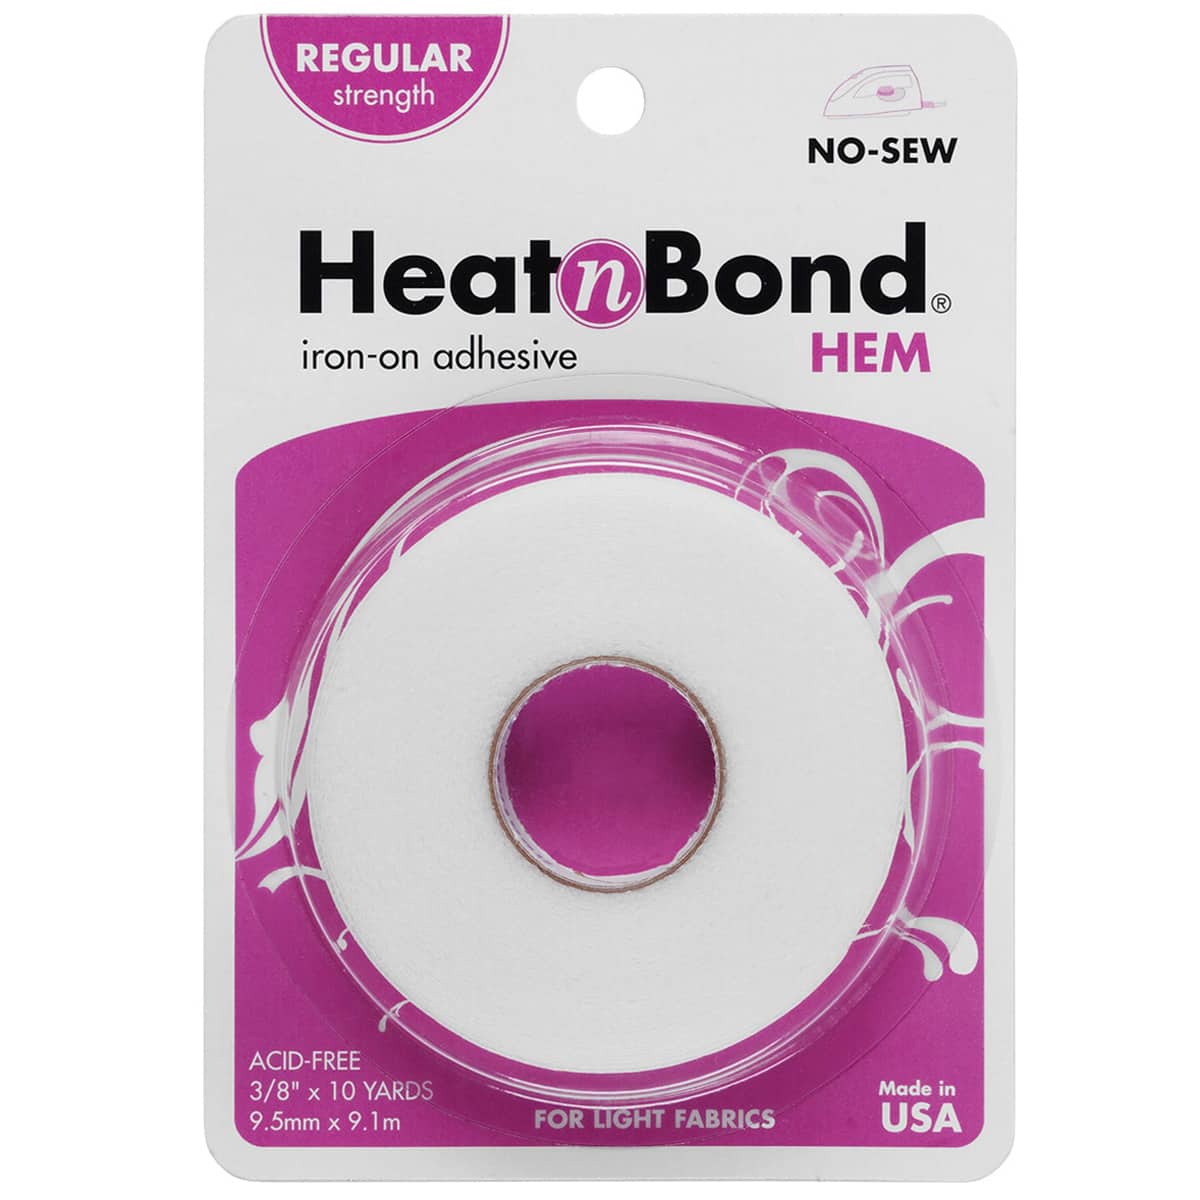 Heat N Bond Iron-On Adhesive, Hem, No-Sew, Regular Strength